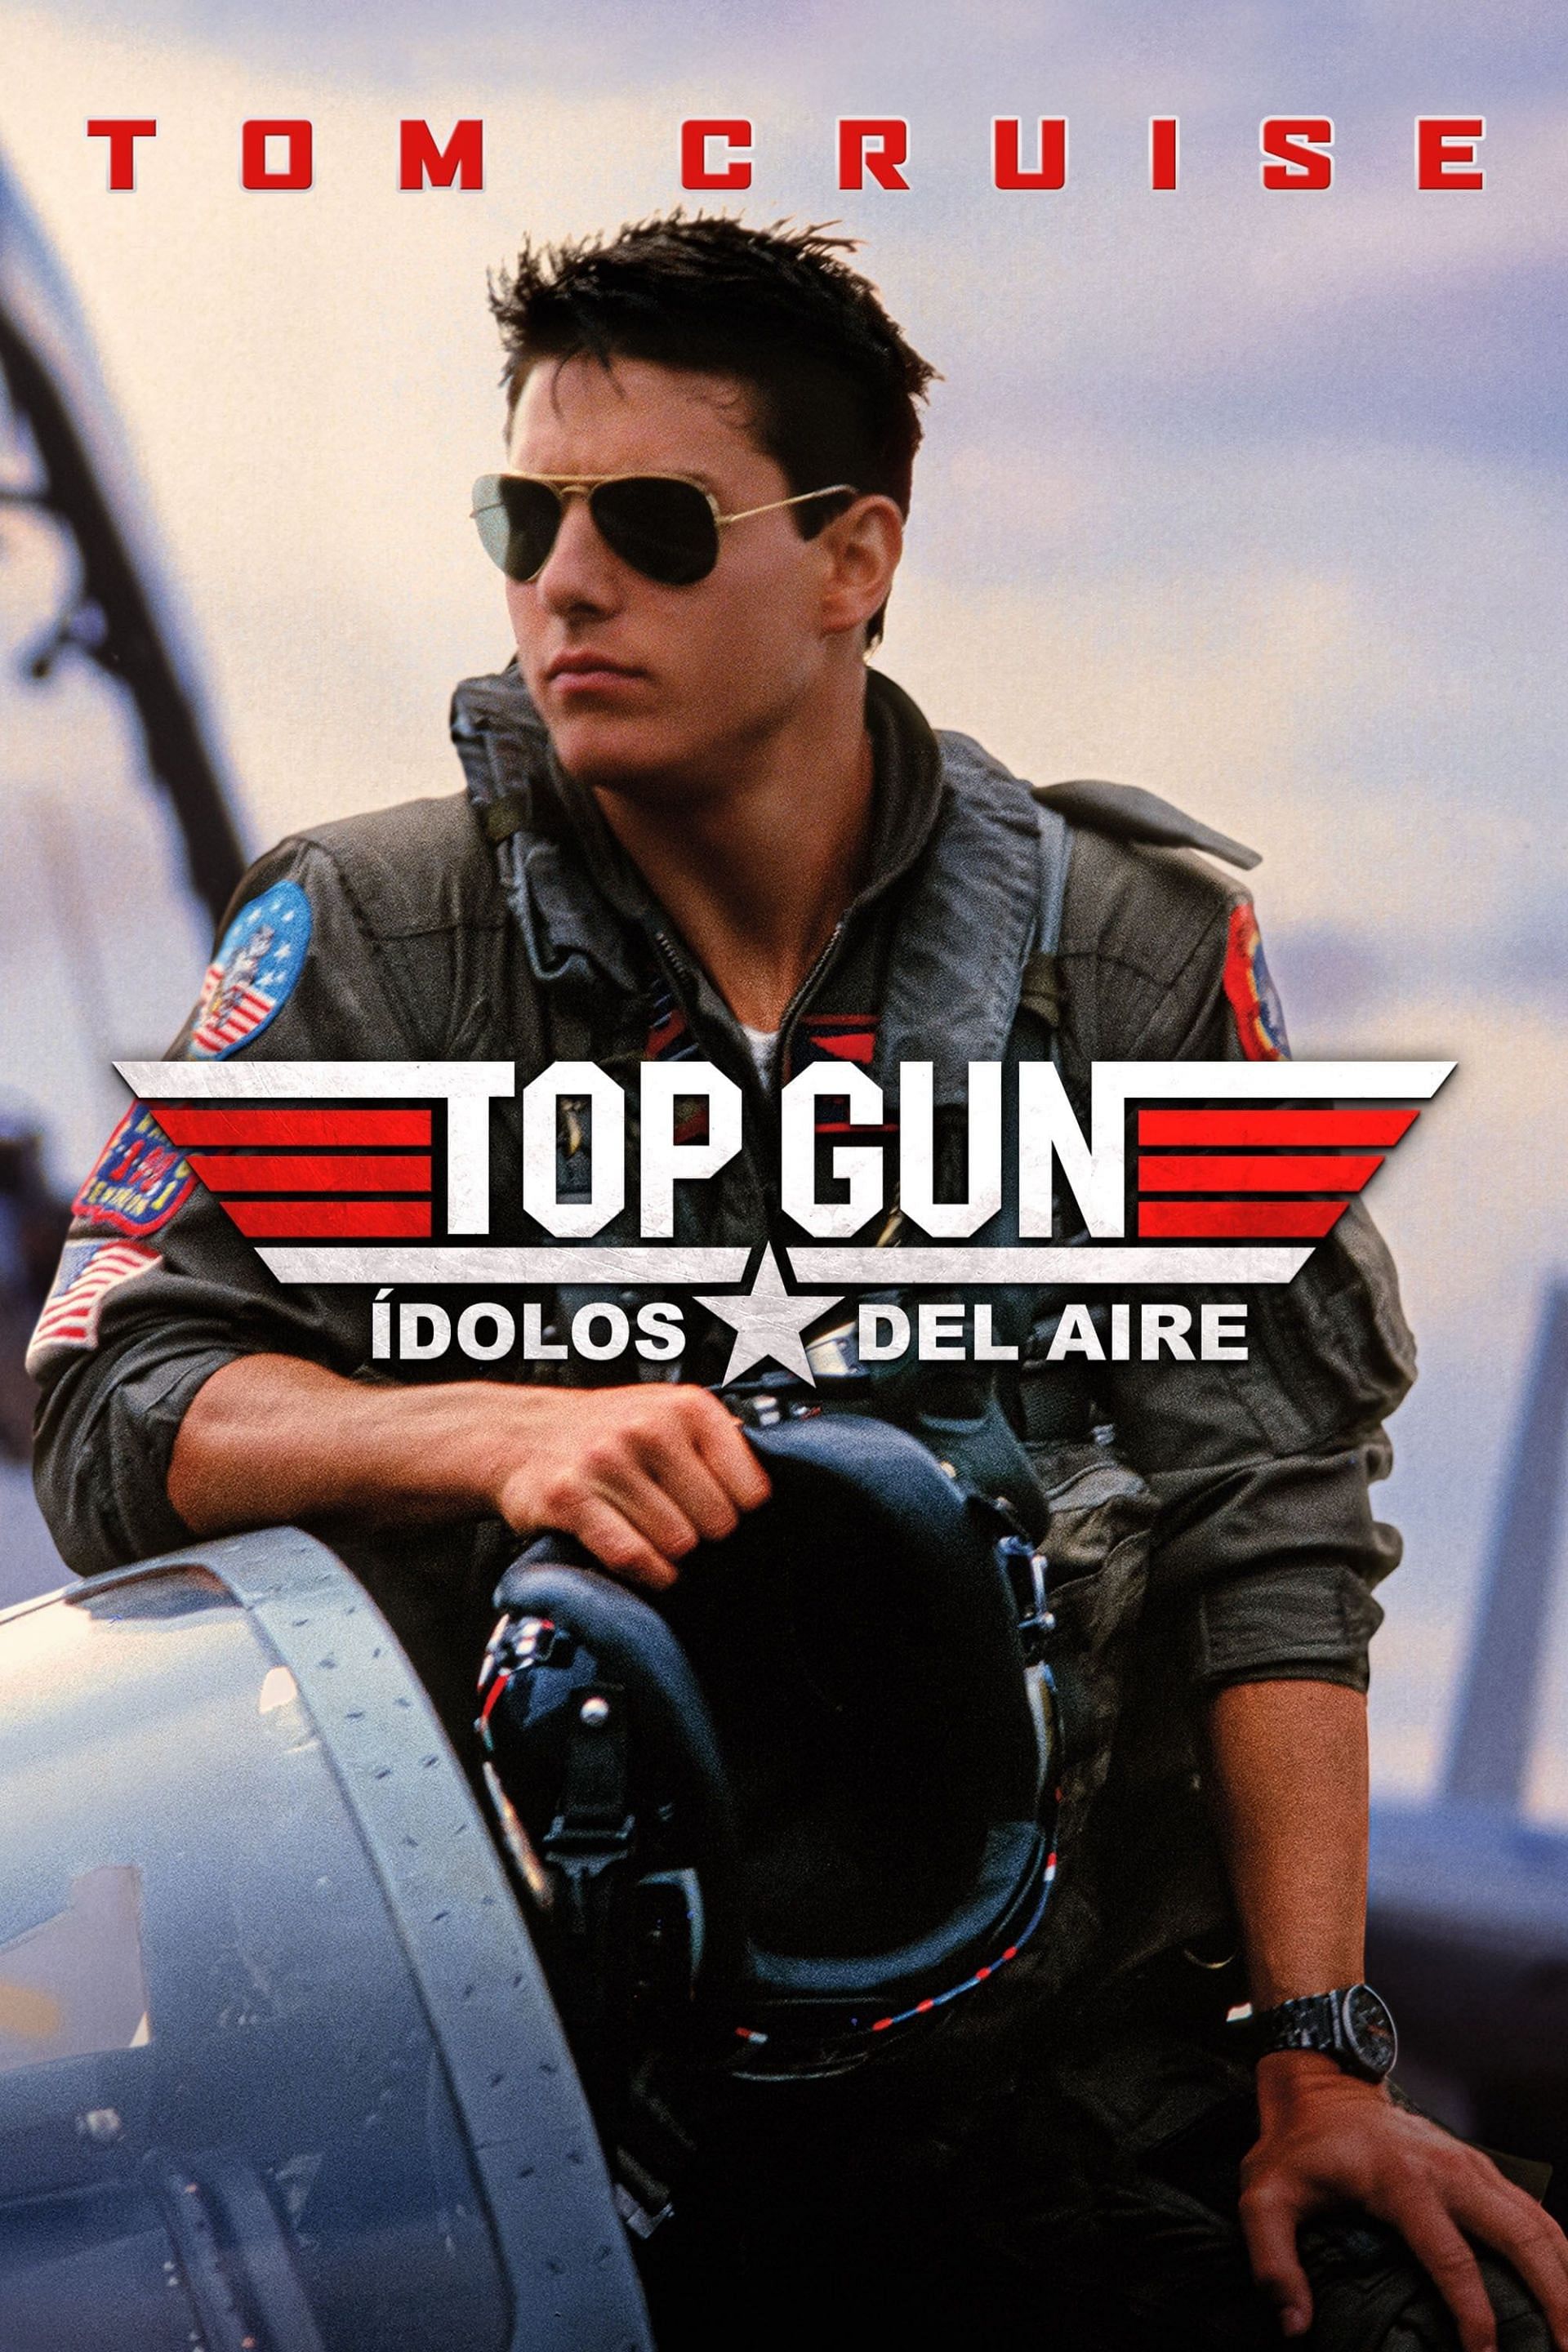 Top Gun (Image via Paramount)